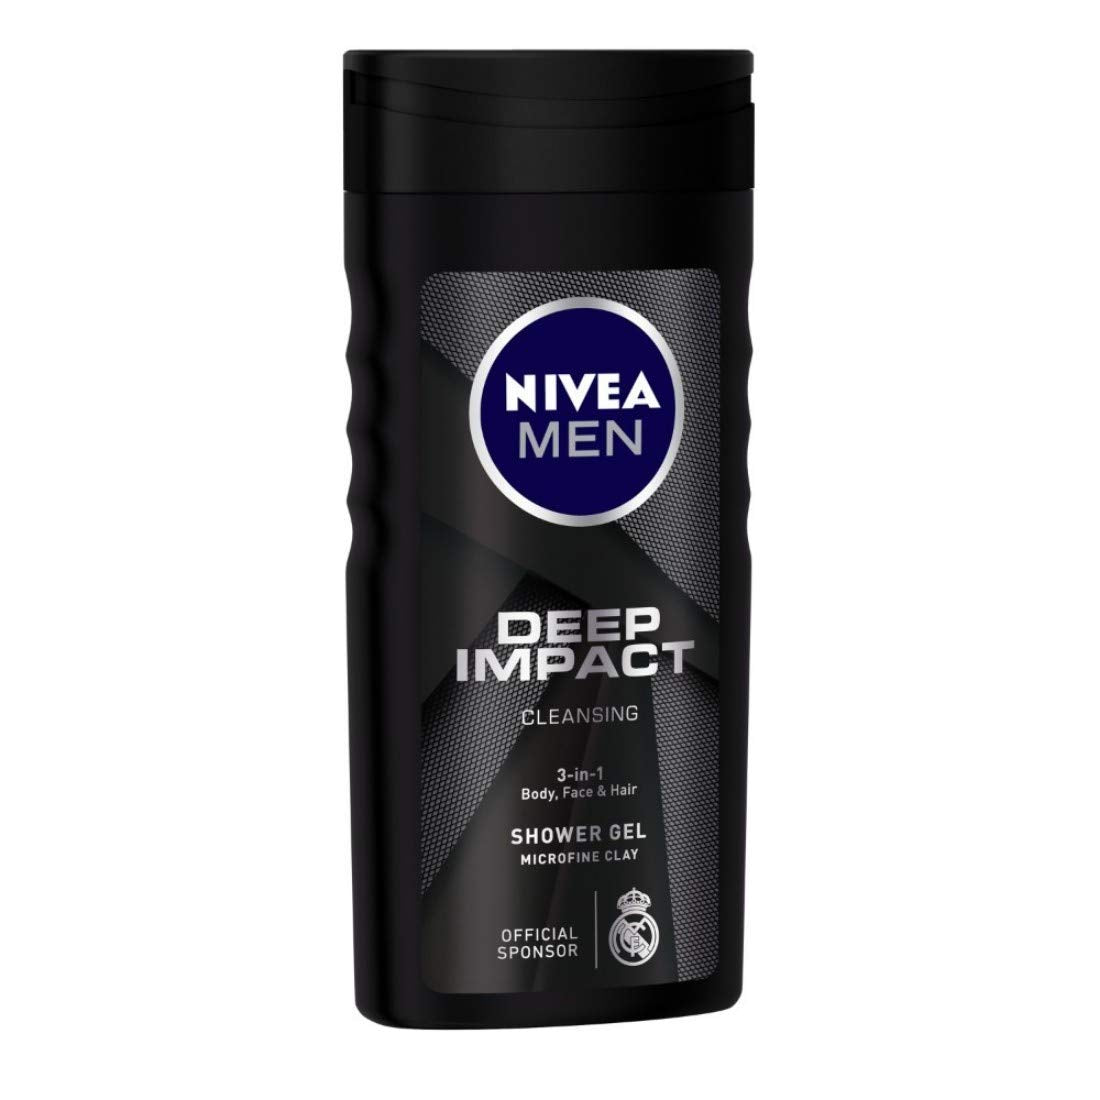 Nivea Men Deep Impact Cleansing Shower Gel (250ml)